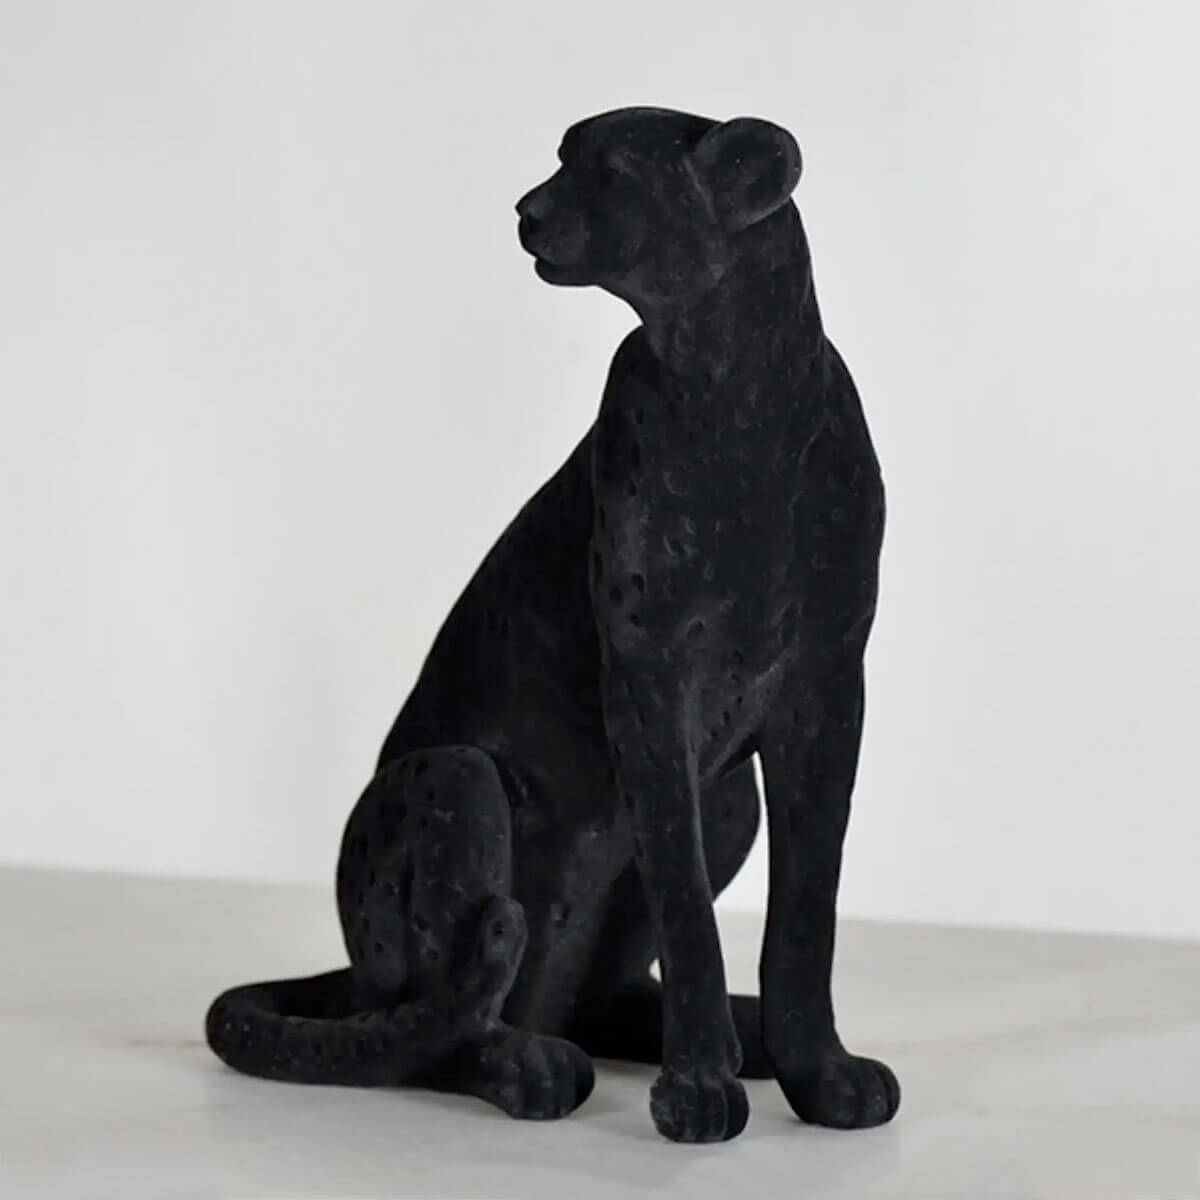 Enigmatic Night Guardian - Mystical Black Leopard Sculpture